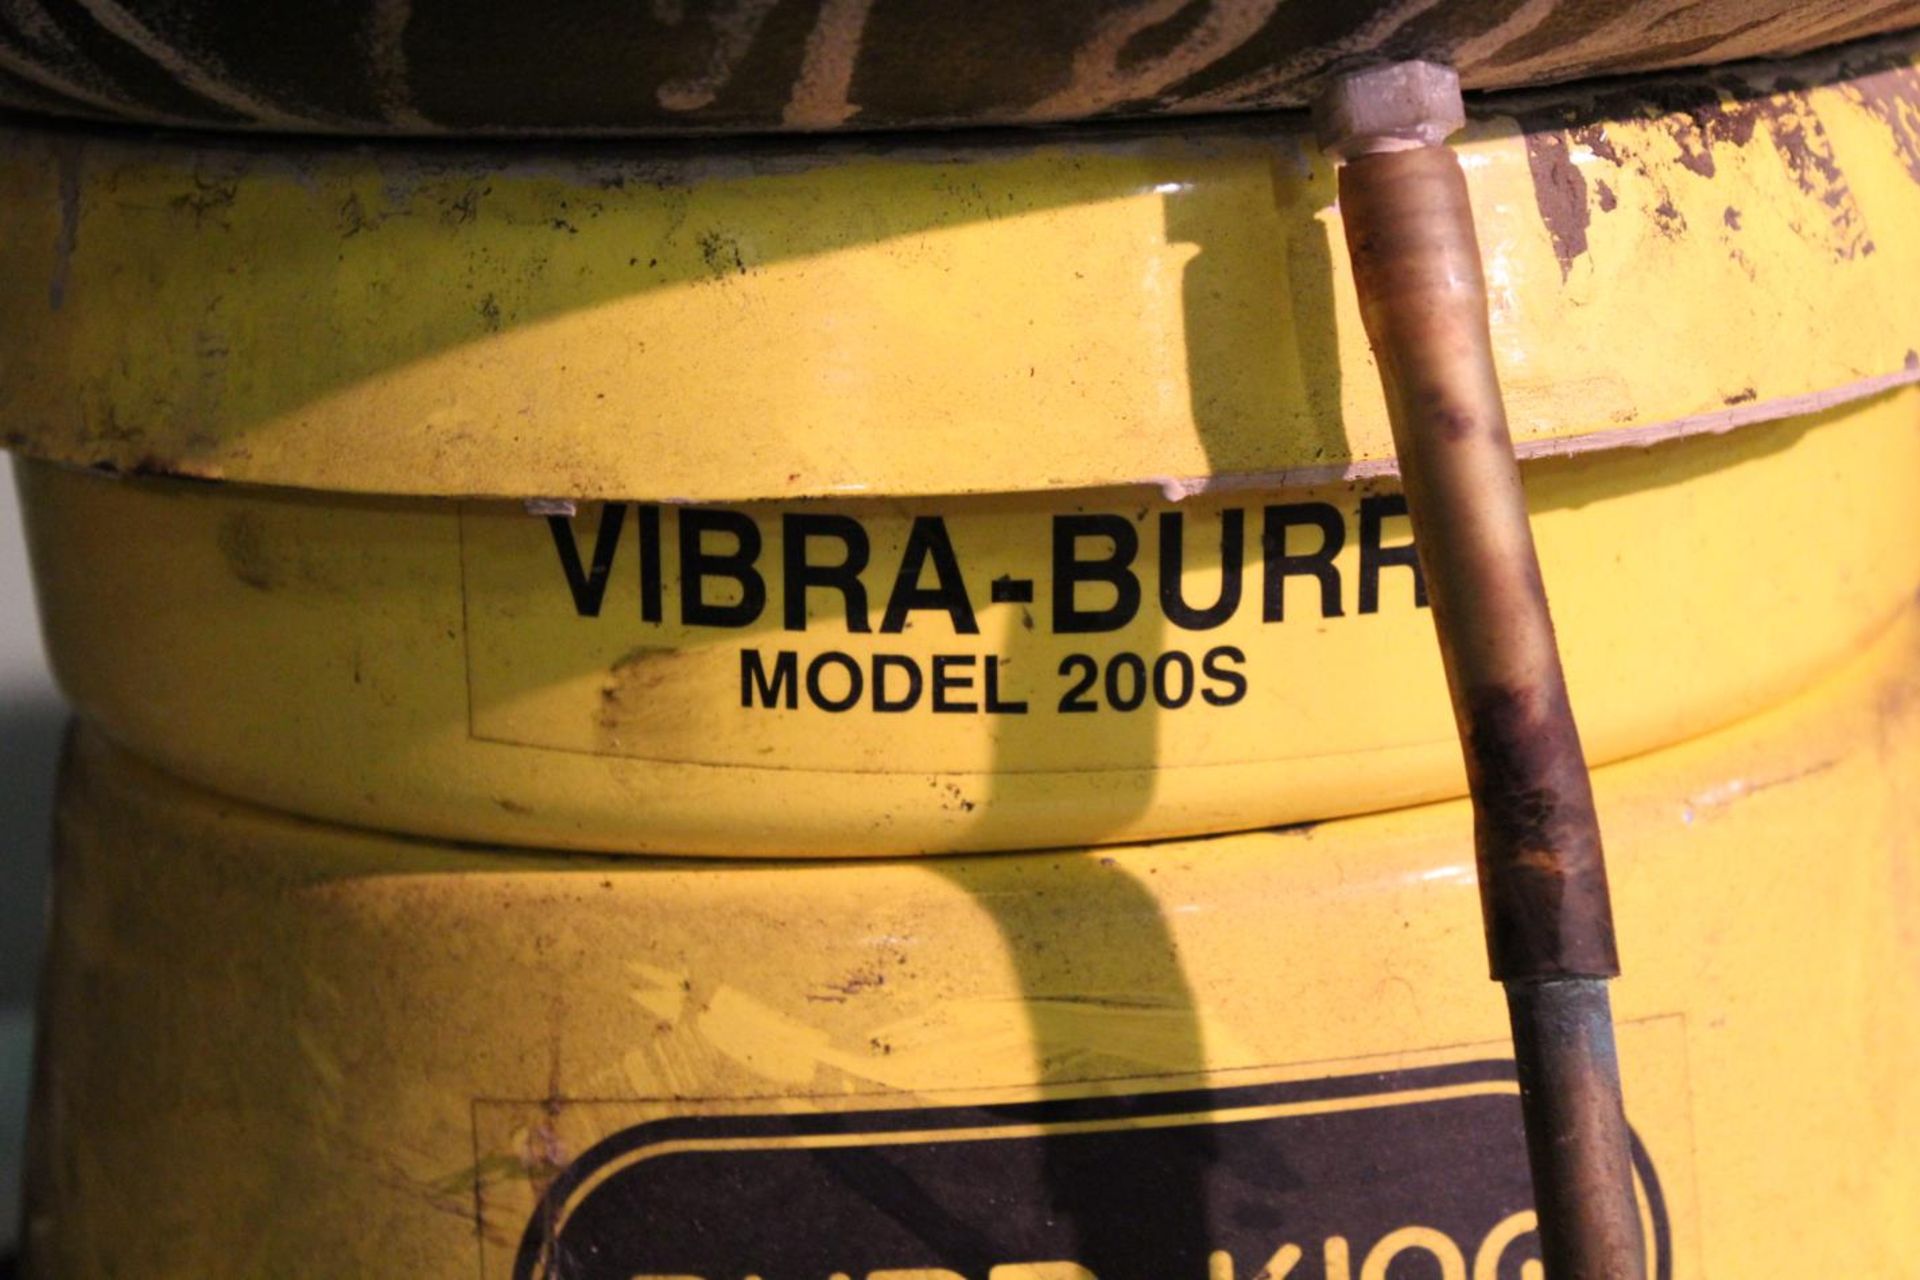 Burr King Vibra-burr 200S - Image 2 of 2